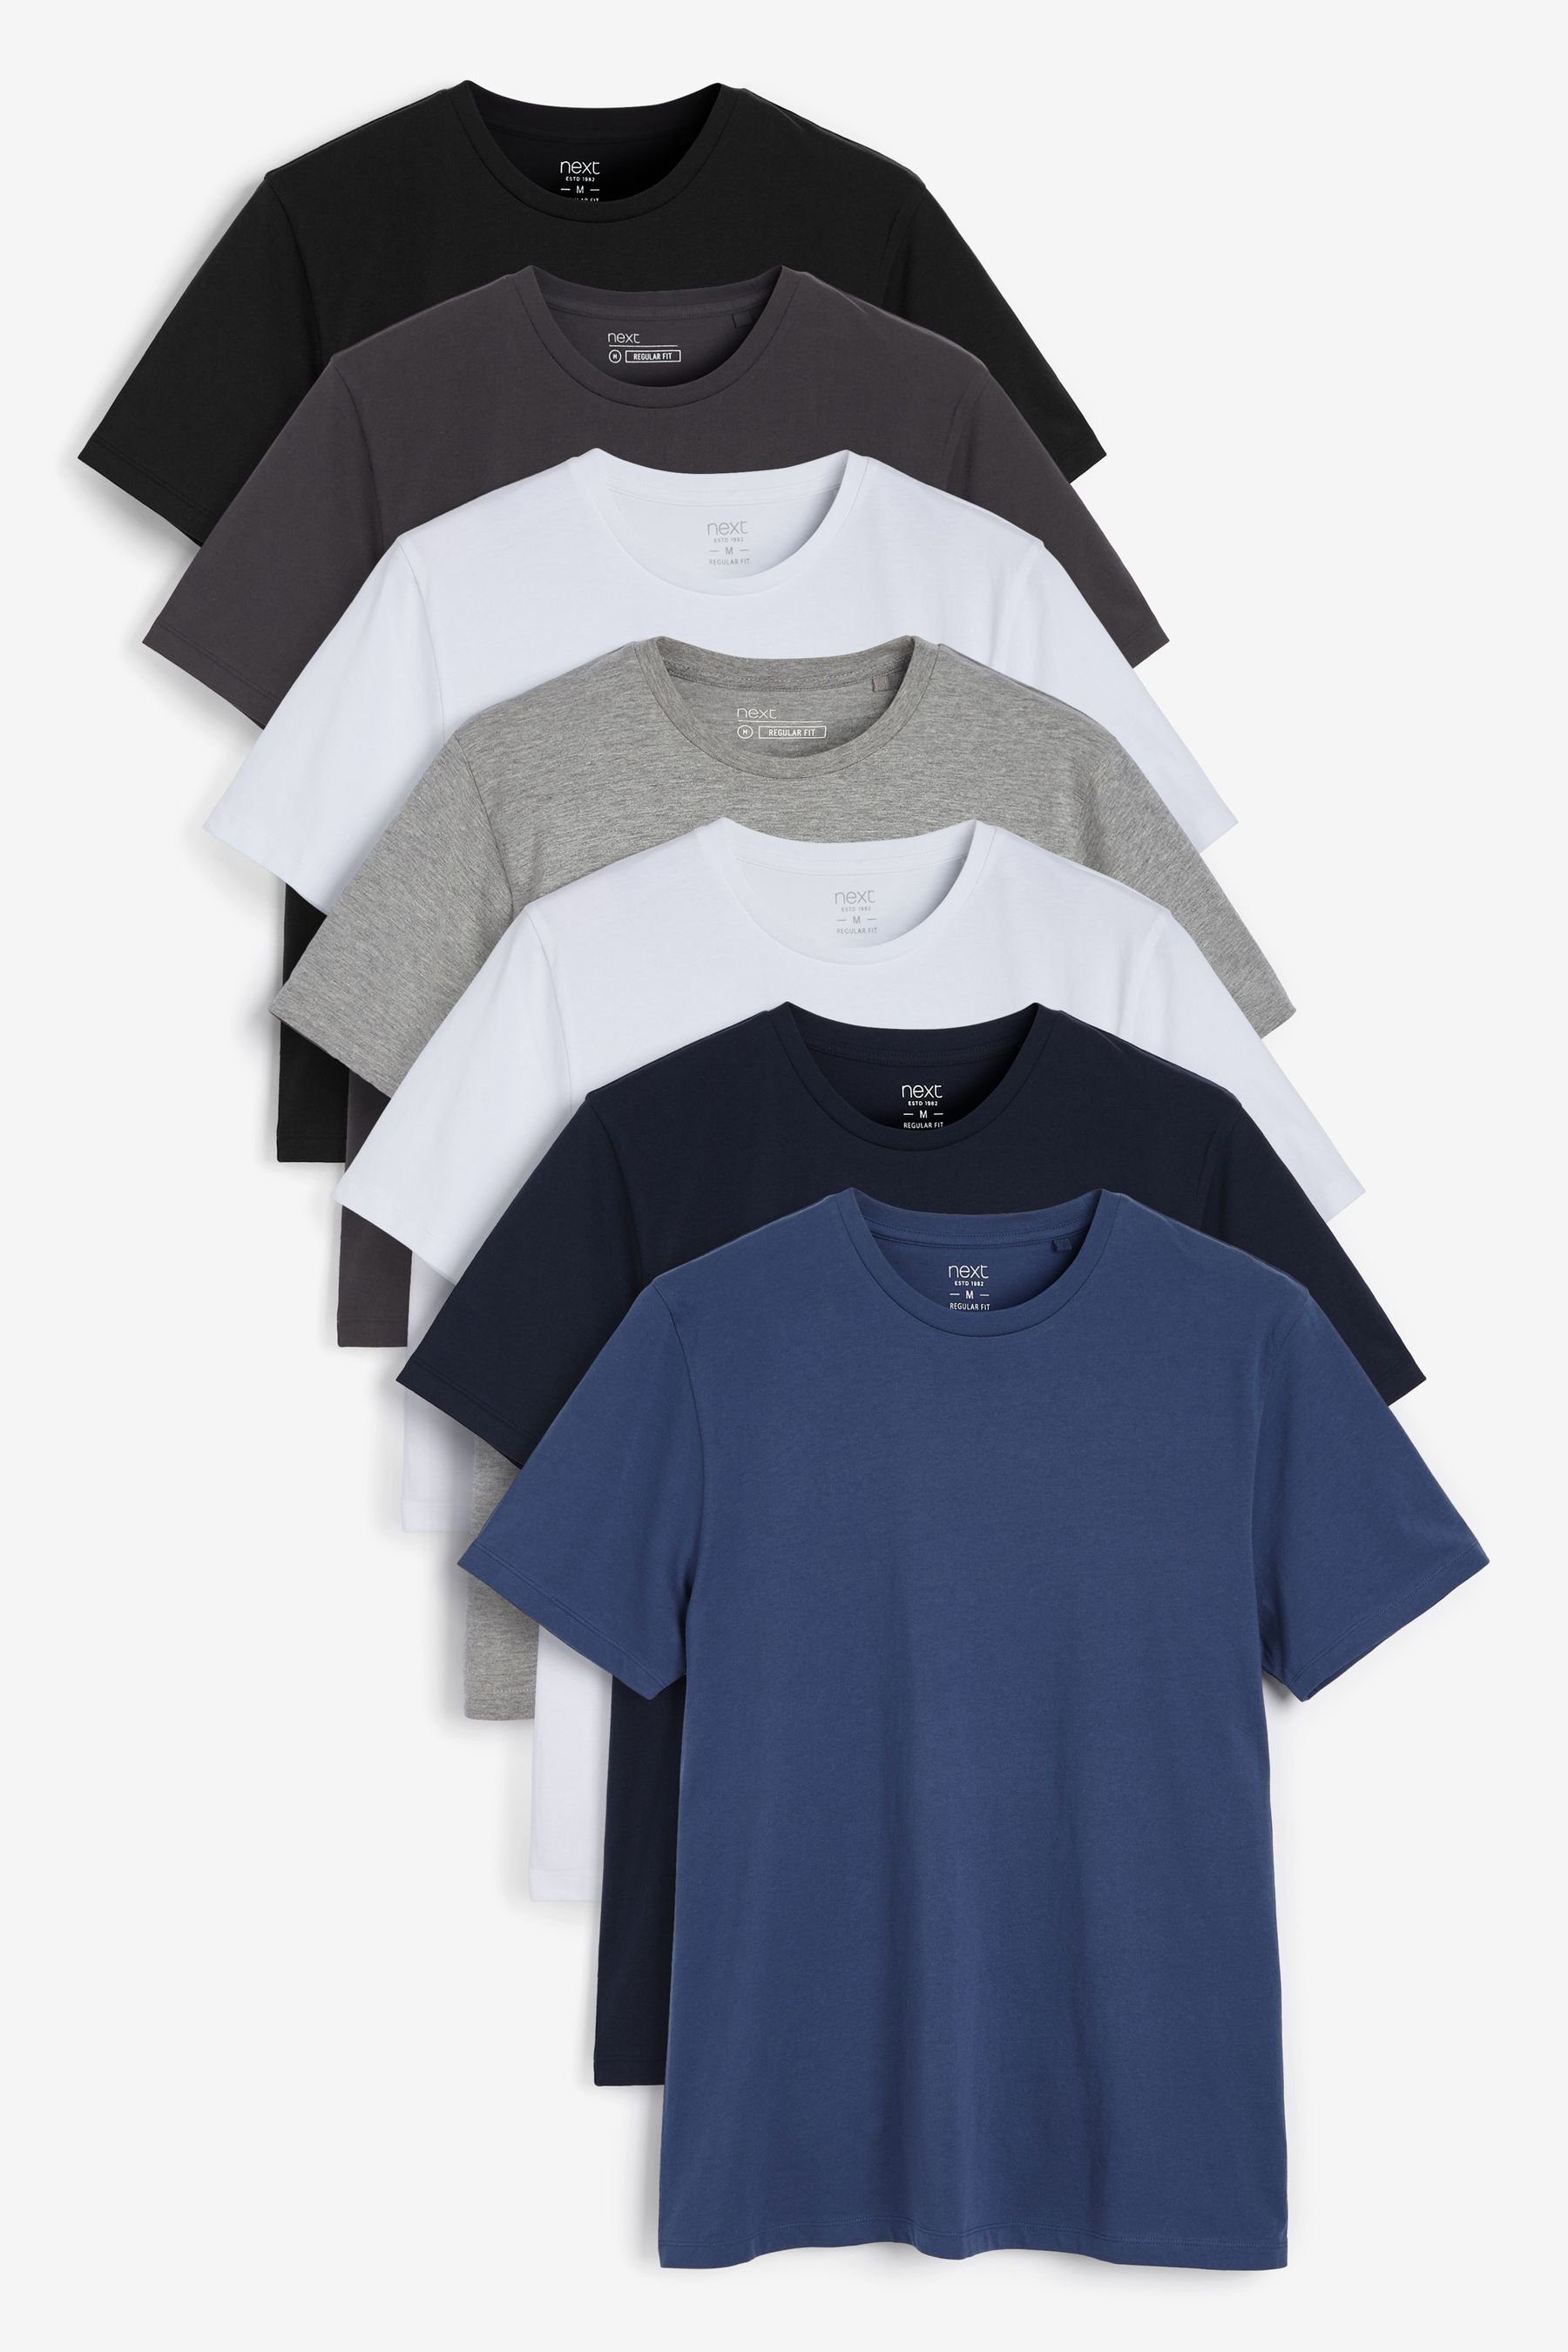 Next T-Shirt (7-tlg) Black/Charcoal Grey/White/Grey Marl/Navy/Blue